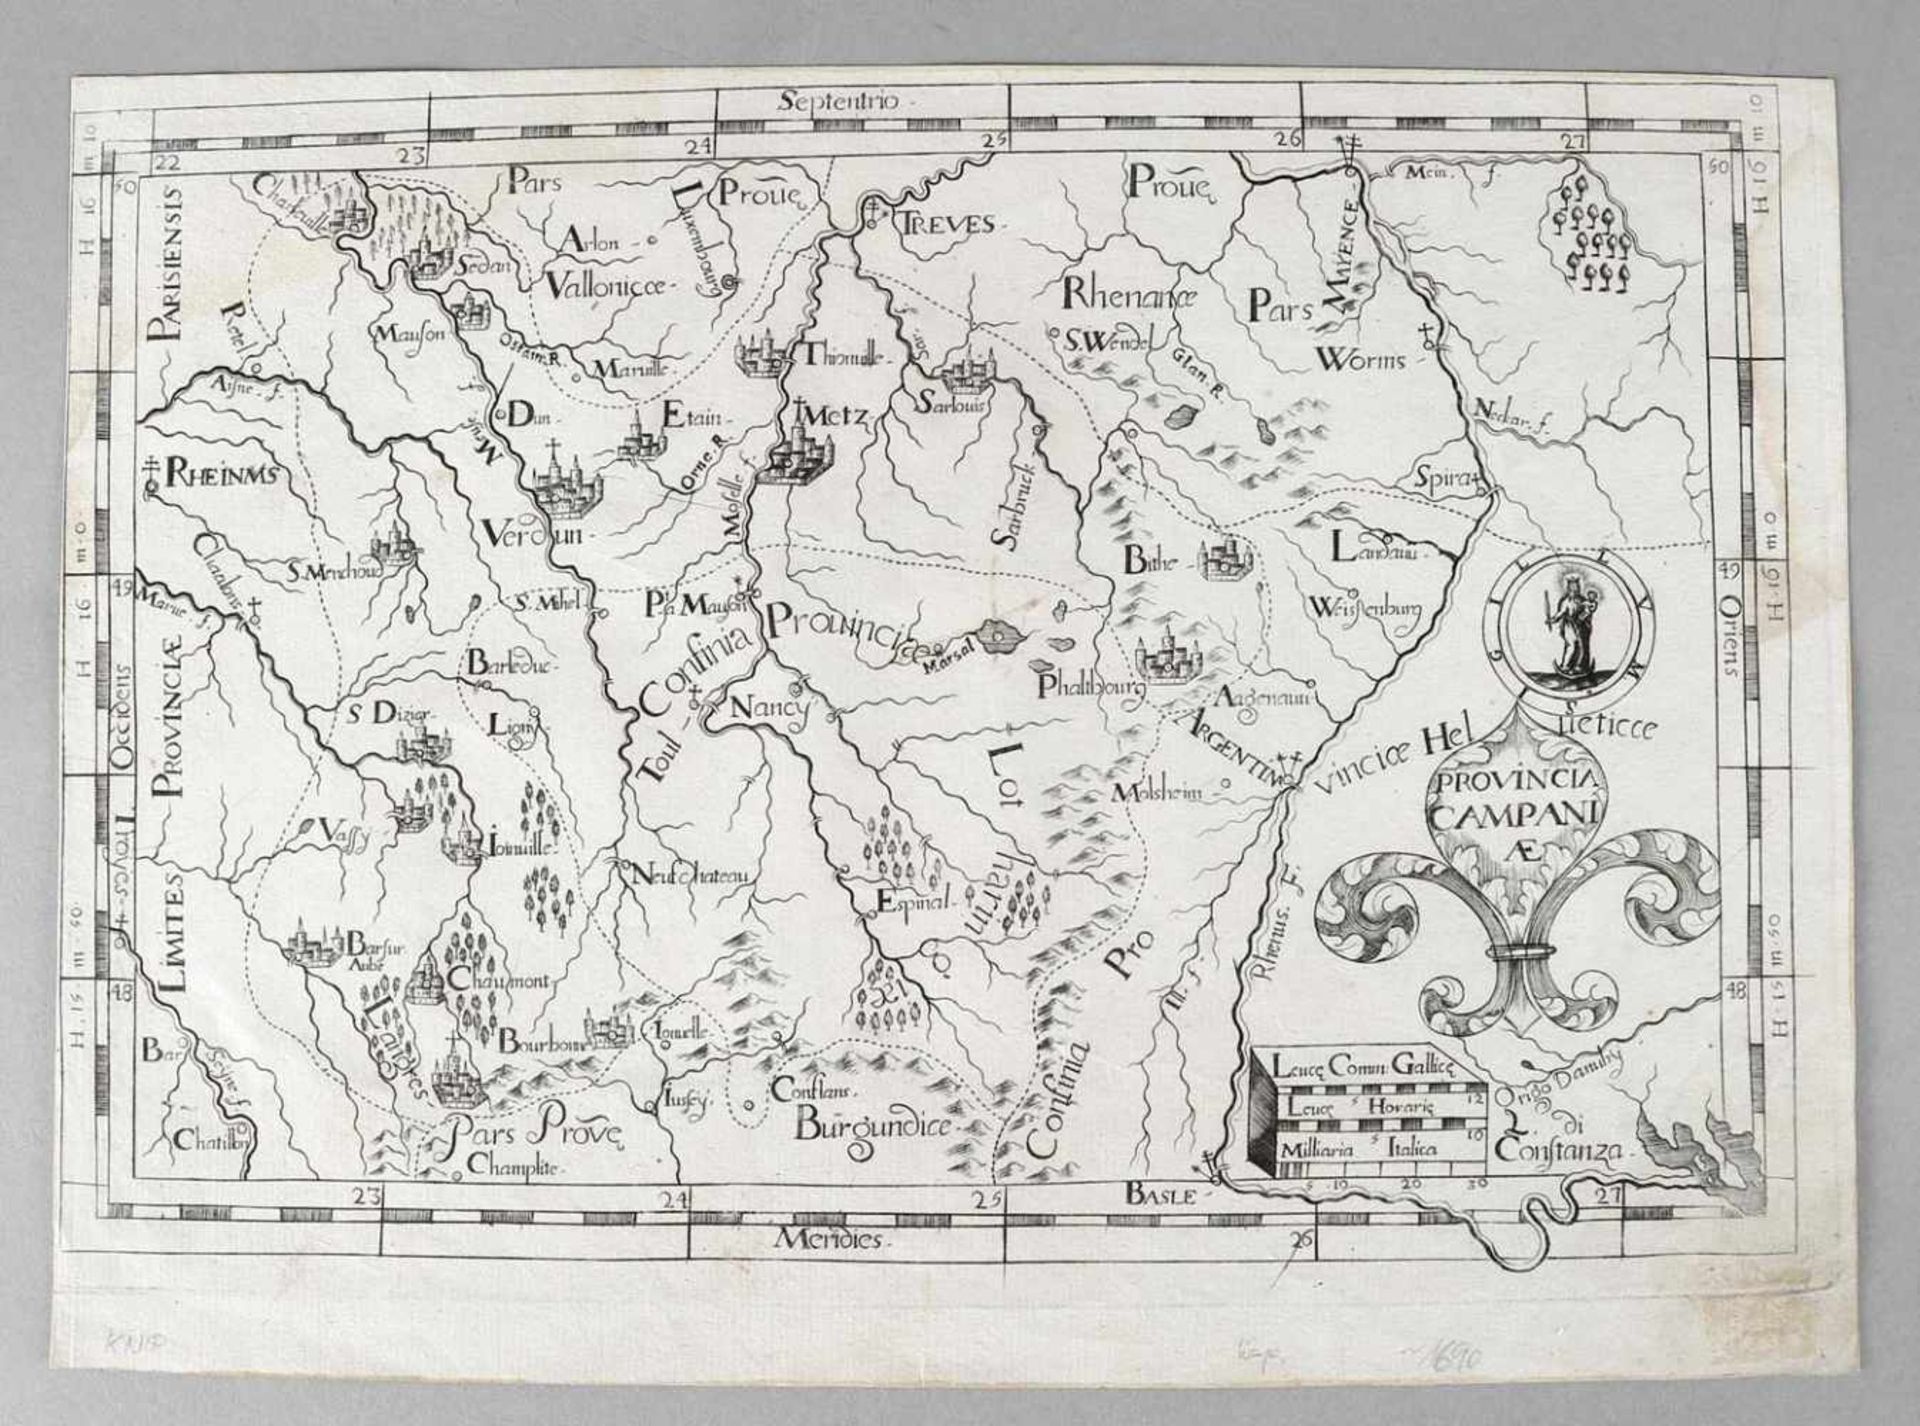 Provincia Campaniae/LotharingiaeKupferstichkarte auf Bütten, um 1690, von Lothringen, ohne Angabe